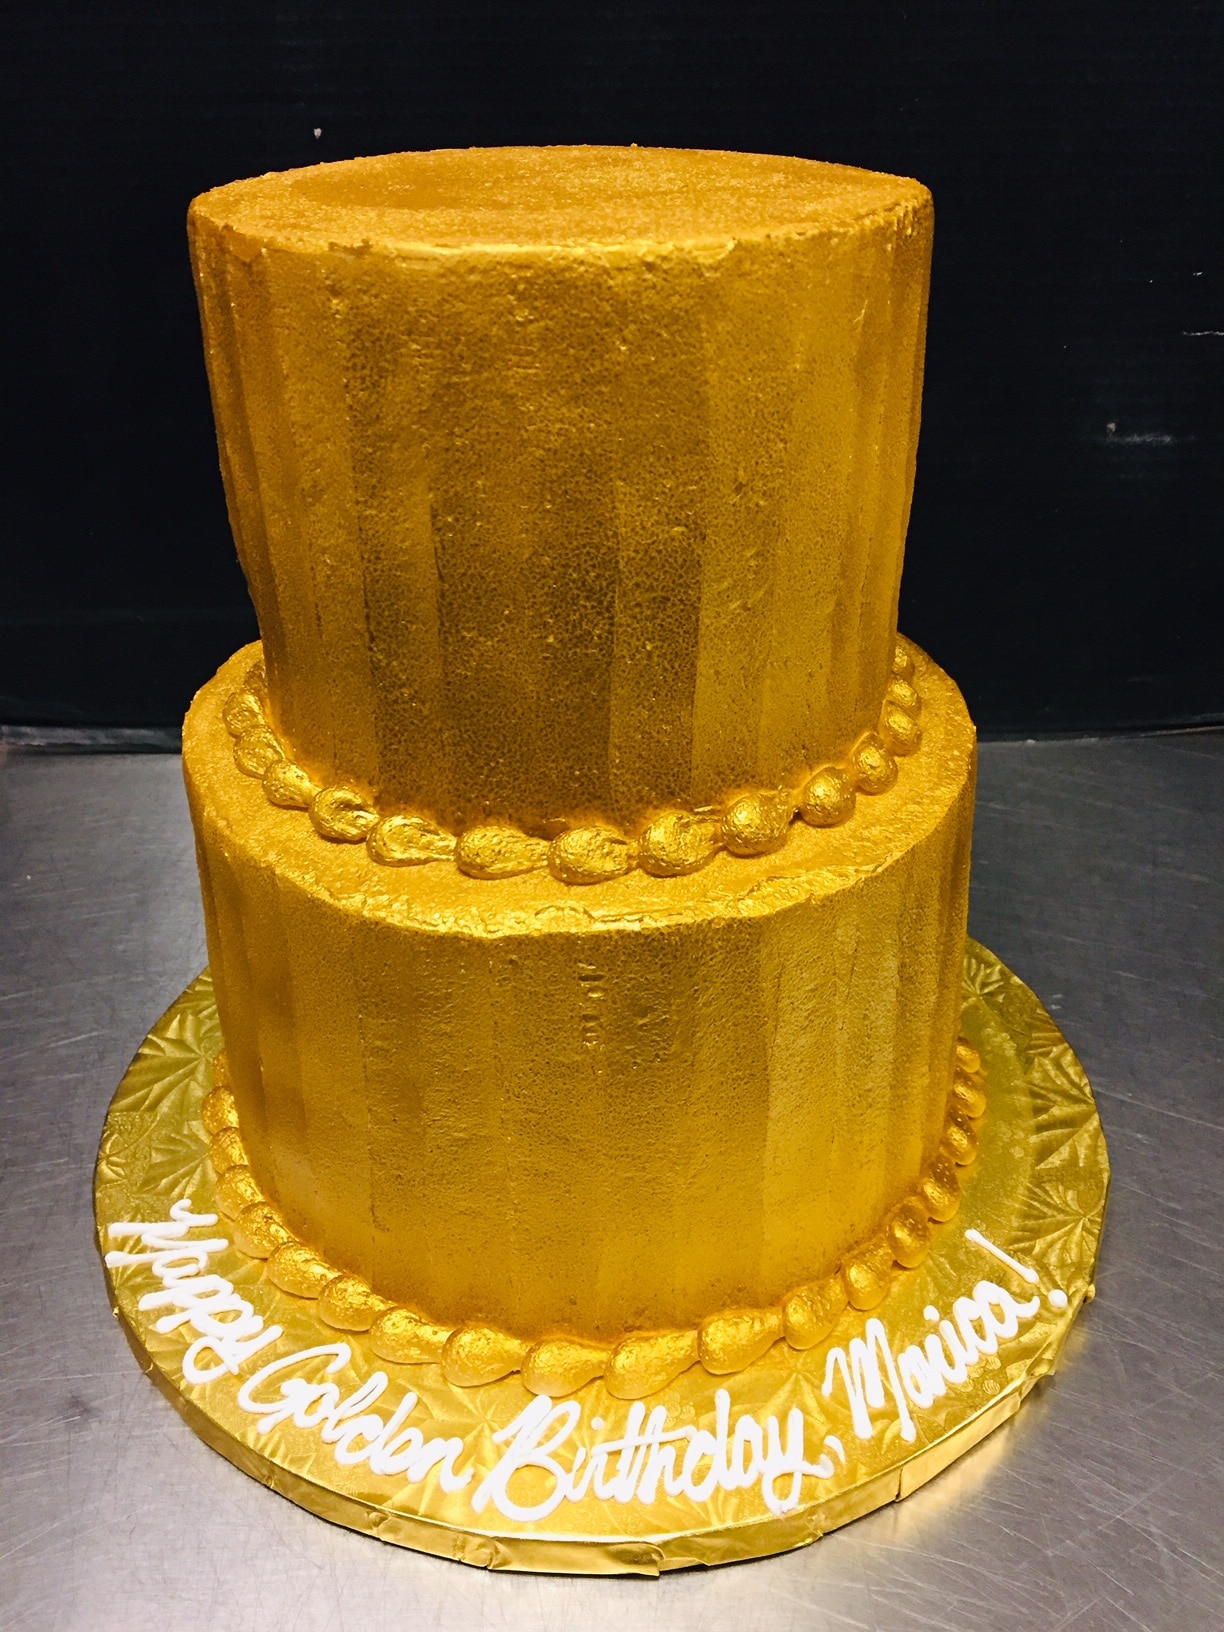 Two Tier Cake 47 - Metallic Gold Airbrush - Aggie's Bakery & Cake Shop